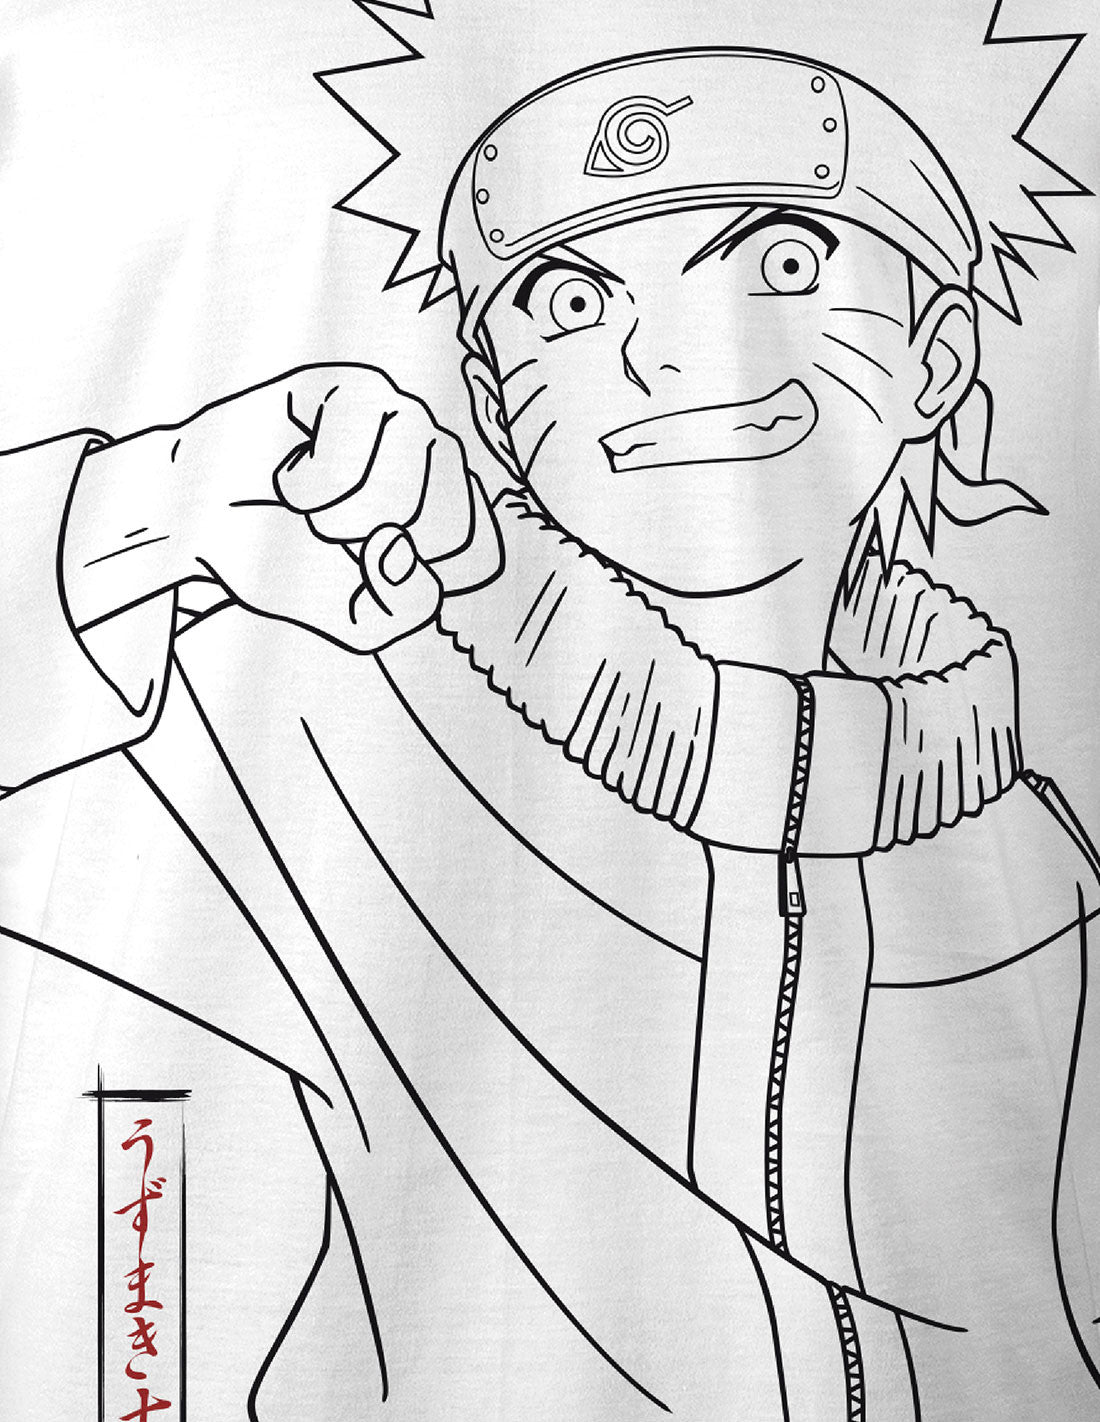 Naruto t-shirt - Japanese art